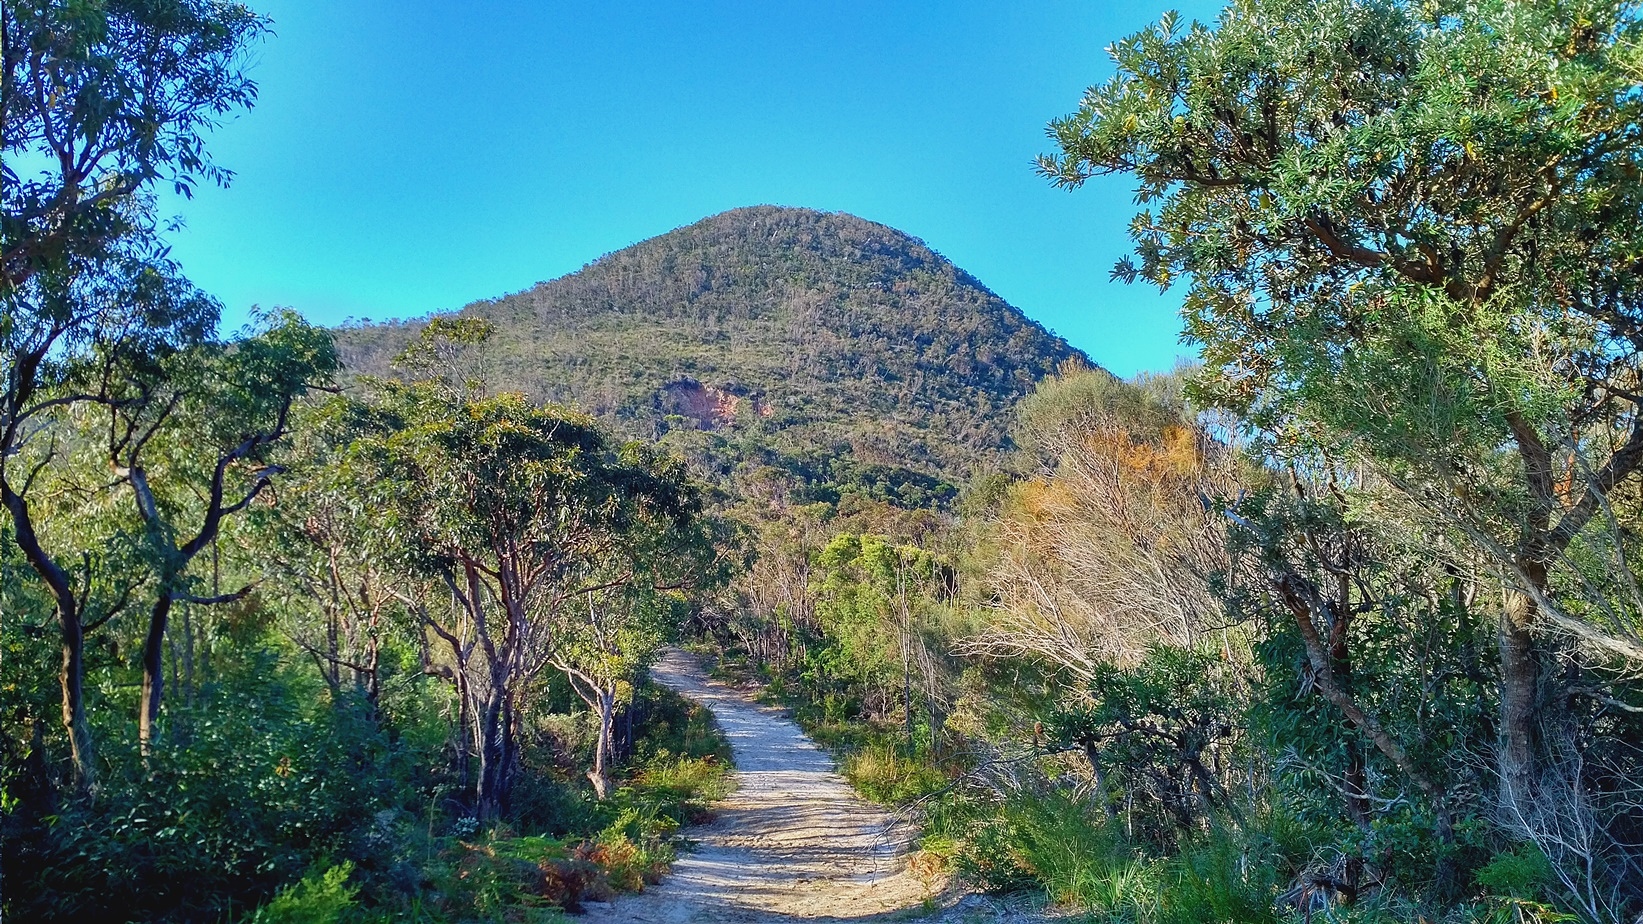 Mount Tomaree